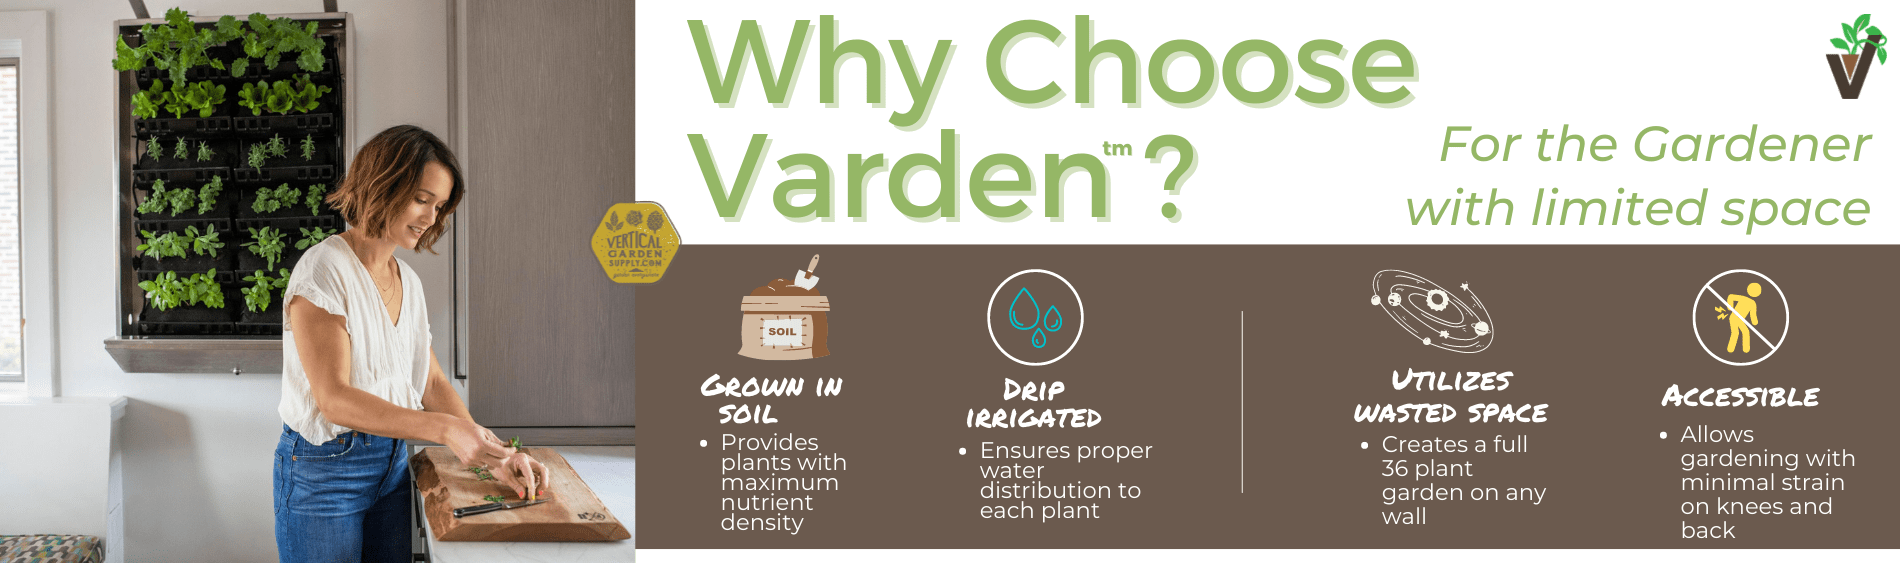 Why choose Varden? grown in soil